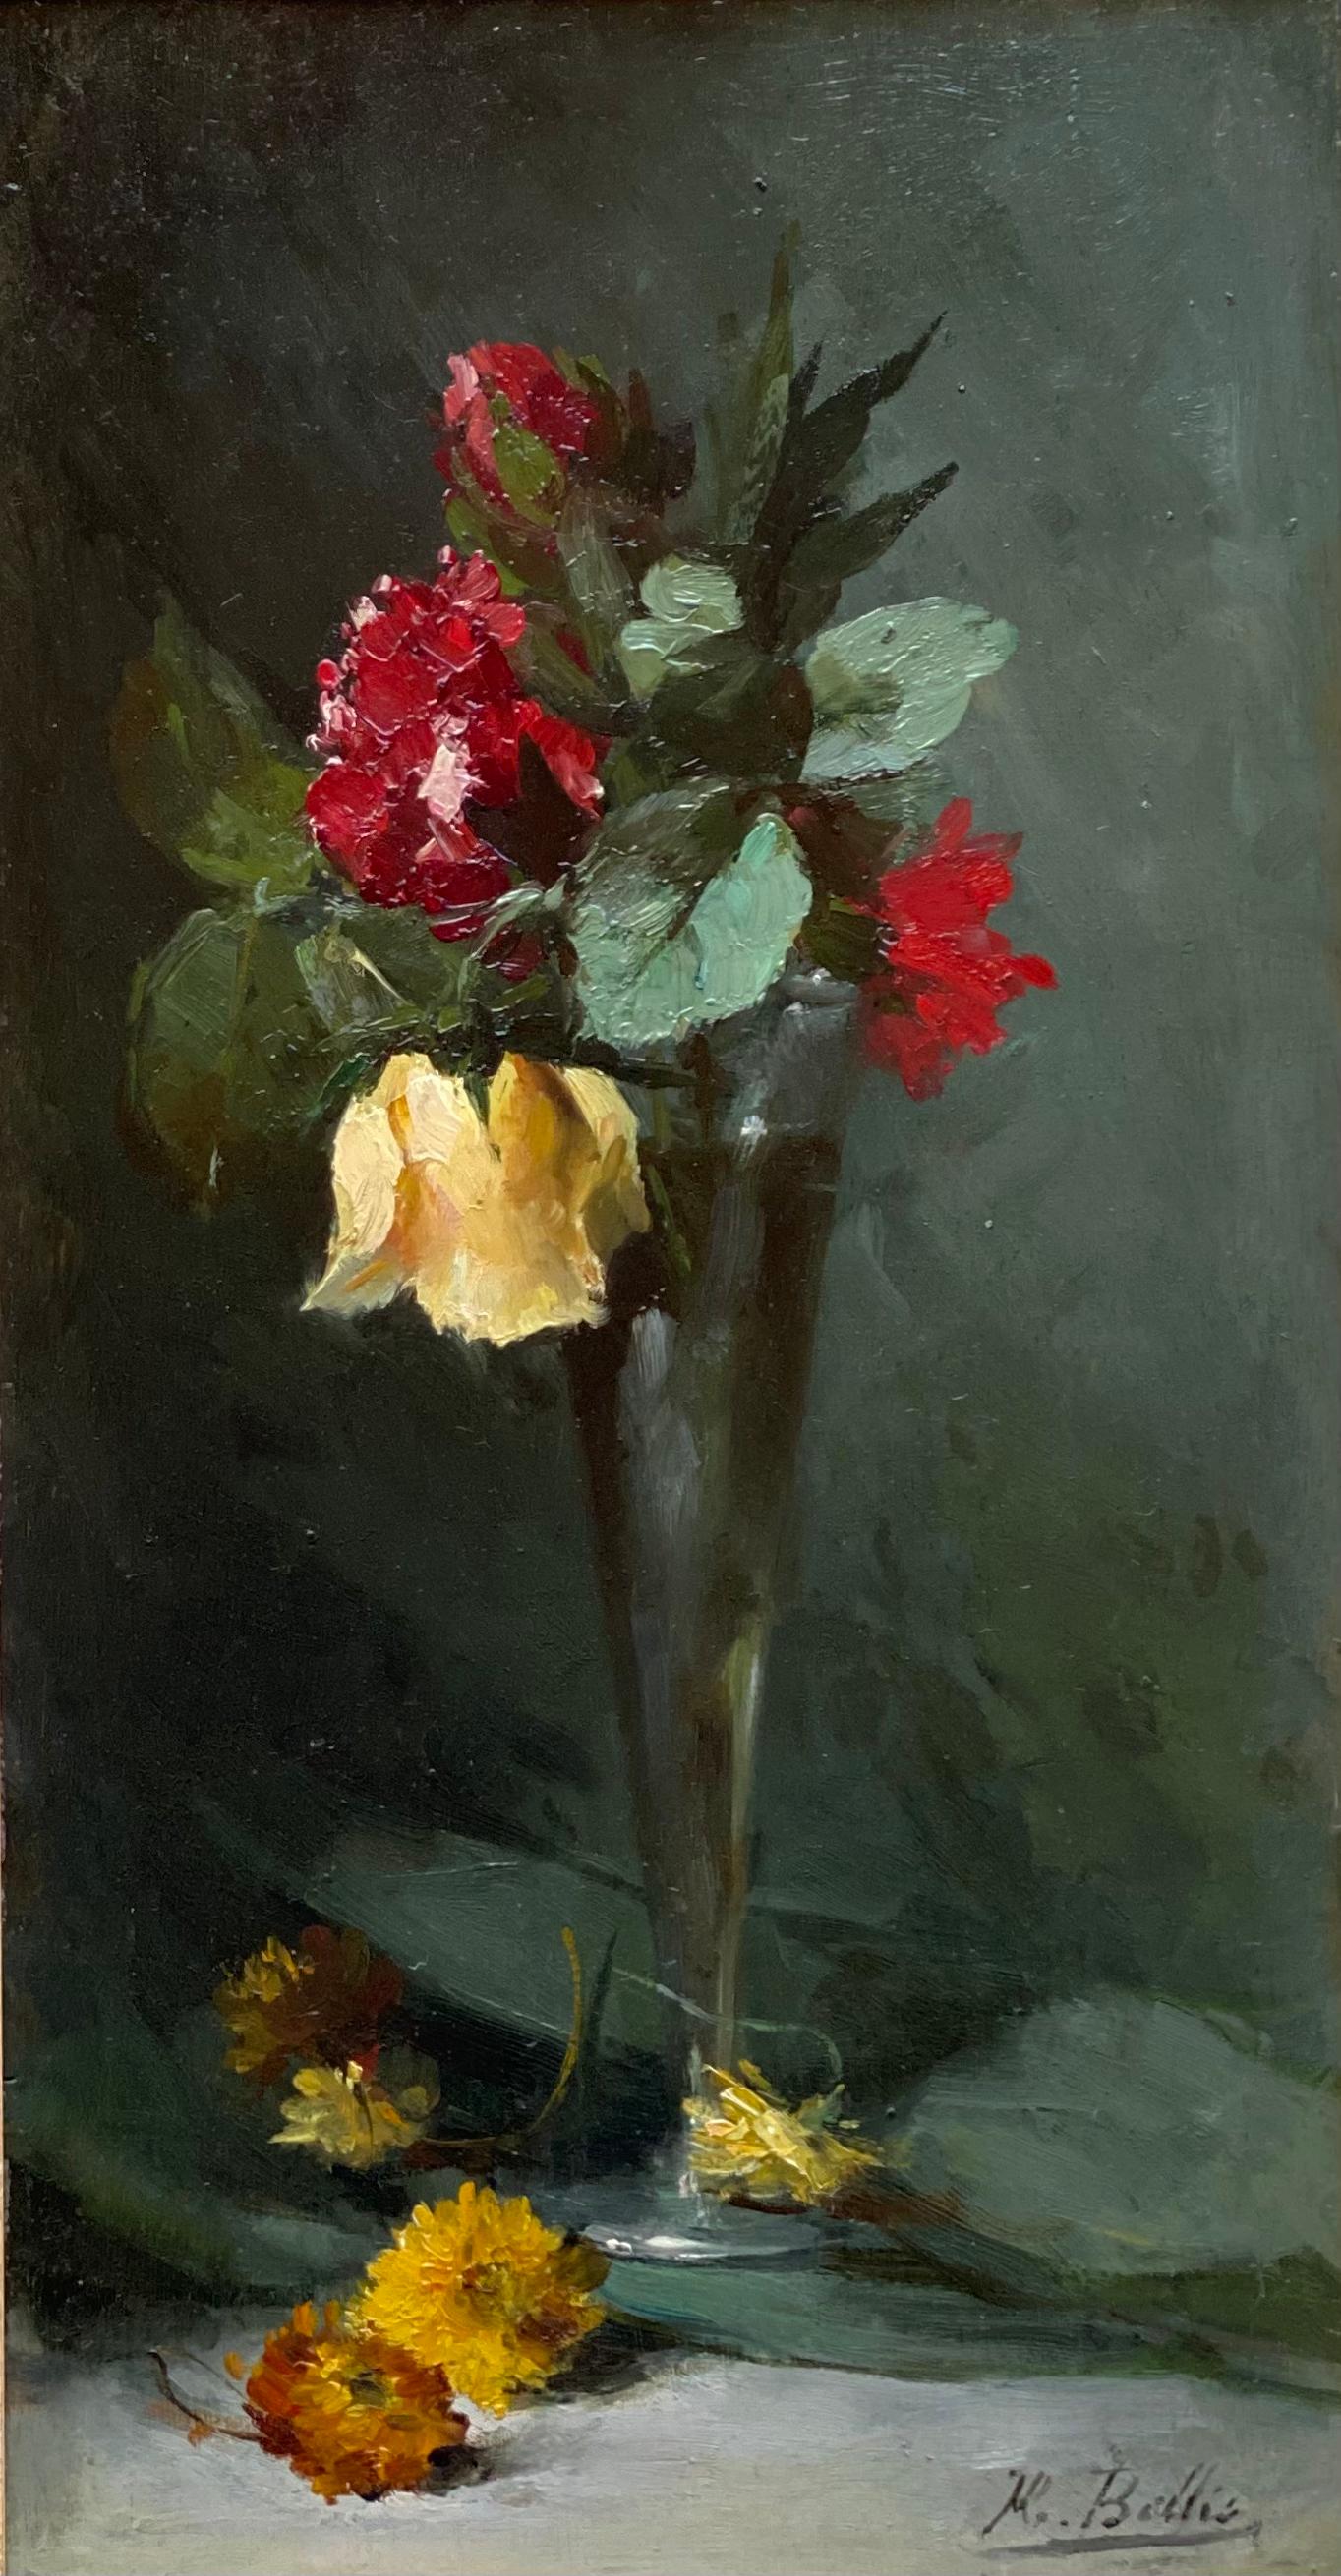   Hubert BELLIS, Bruxelles 1831 - 1902, peintre belge, 